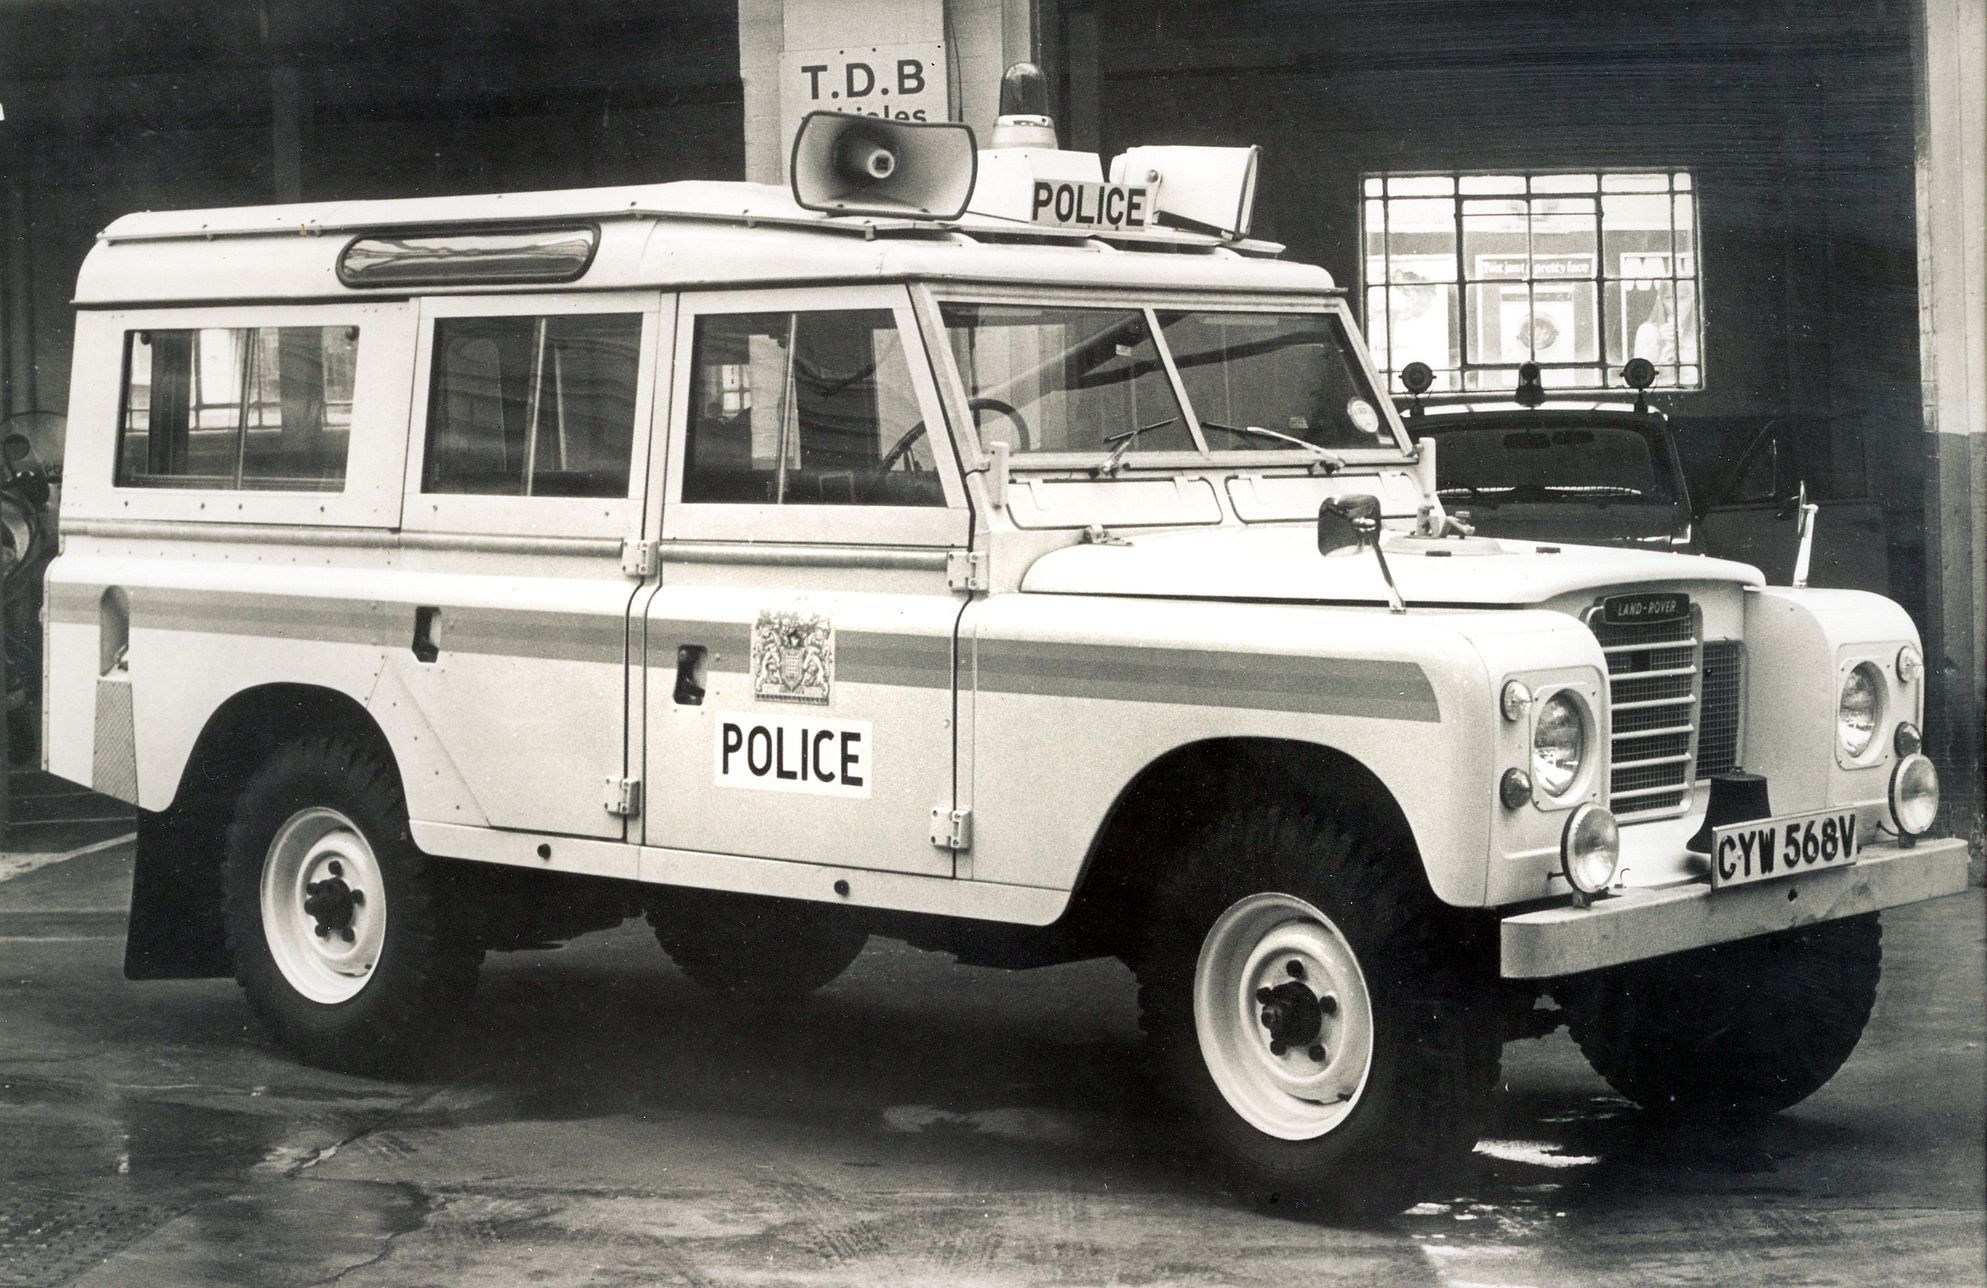 Land Rover Defender - 24 lr_heritage_series_iii_109in_police_1983